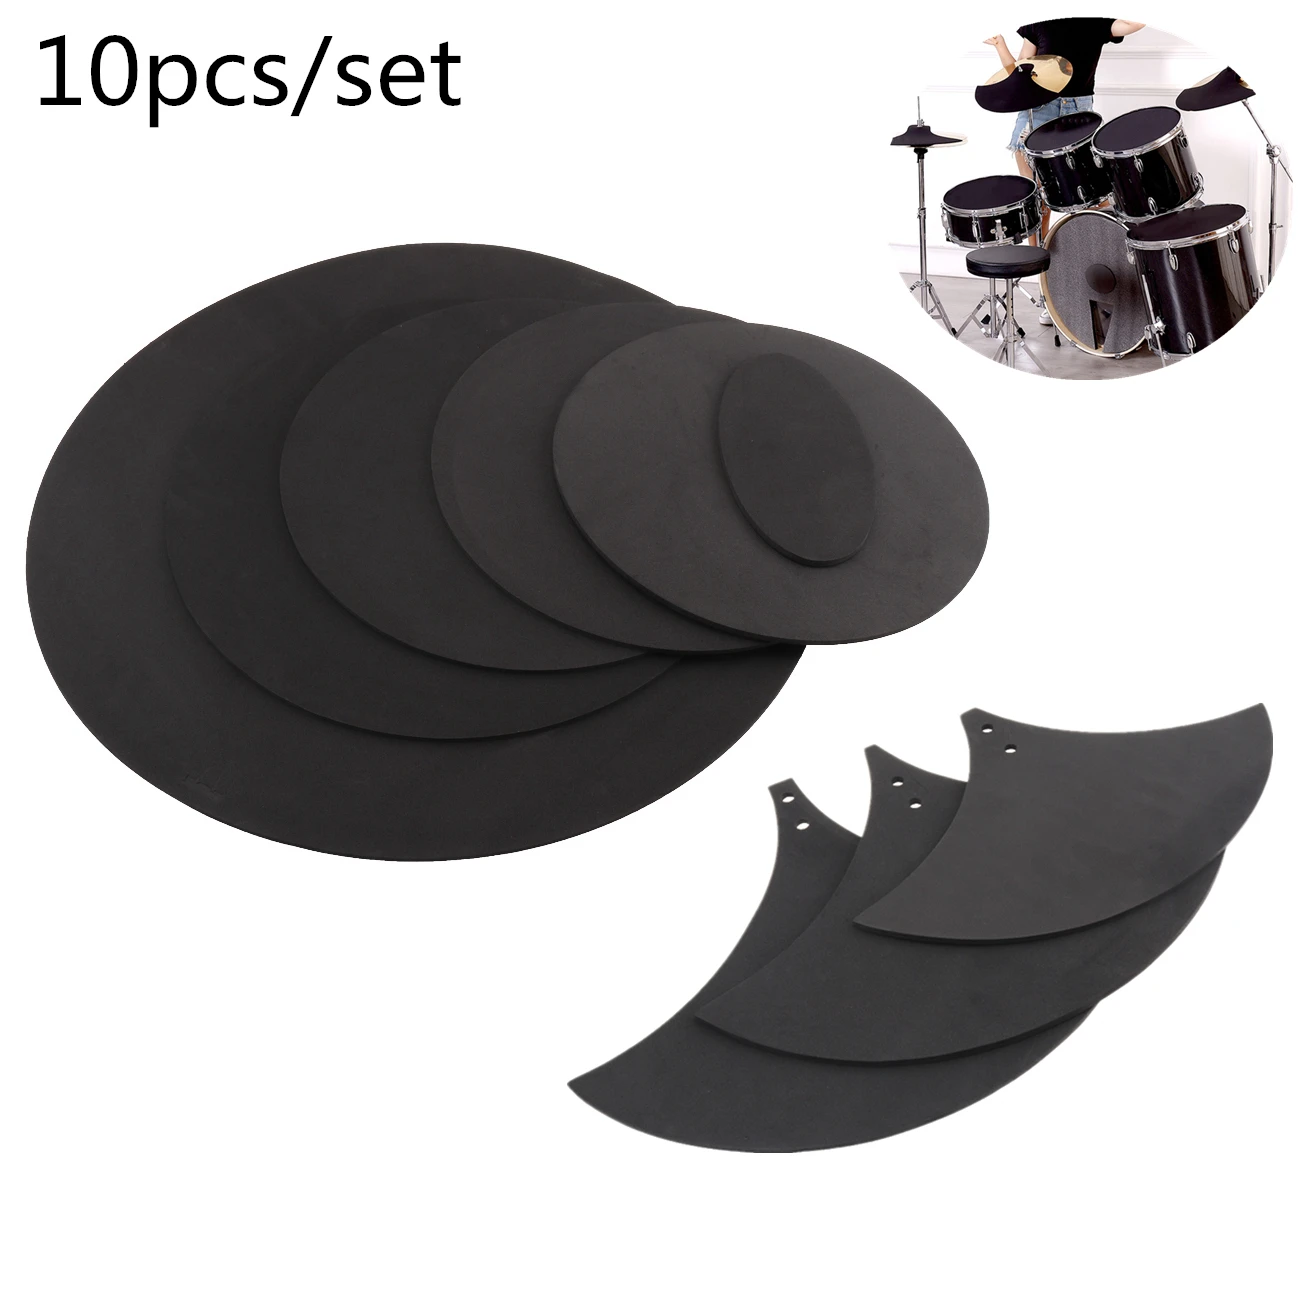 

10pcs/lot Rubber Foam Jazz Drum Mute 5 Drum & 3 Cymbal Sound Off Practice Pad Kit